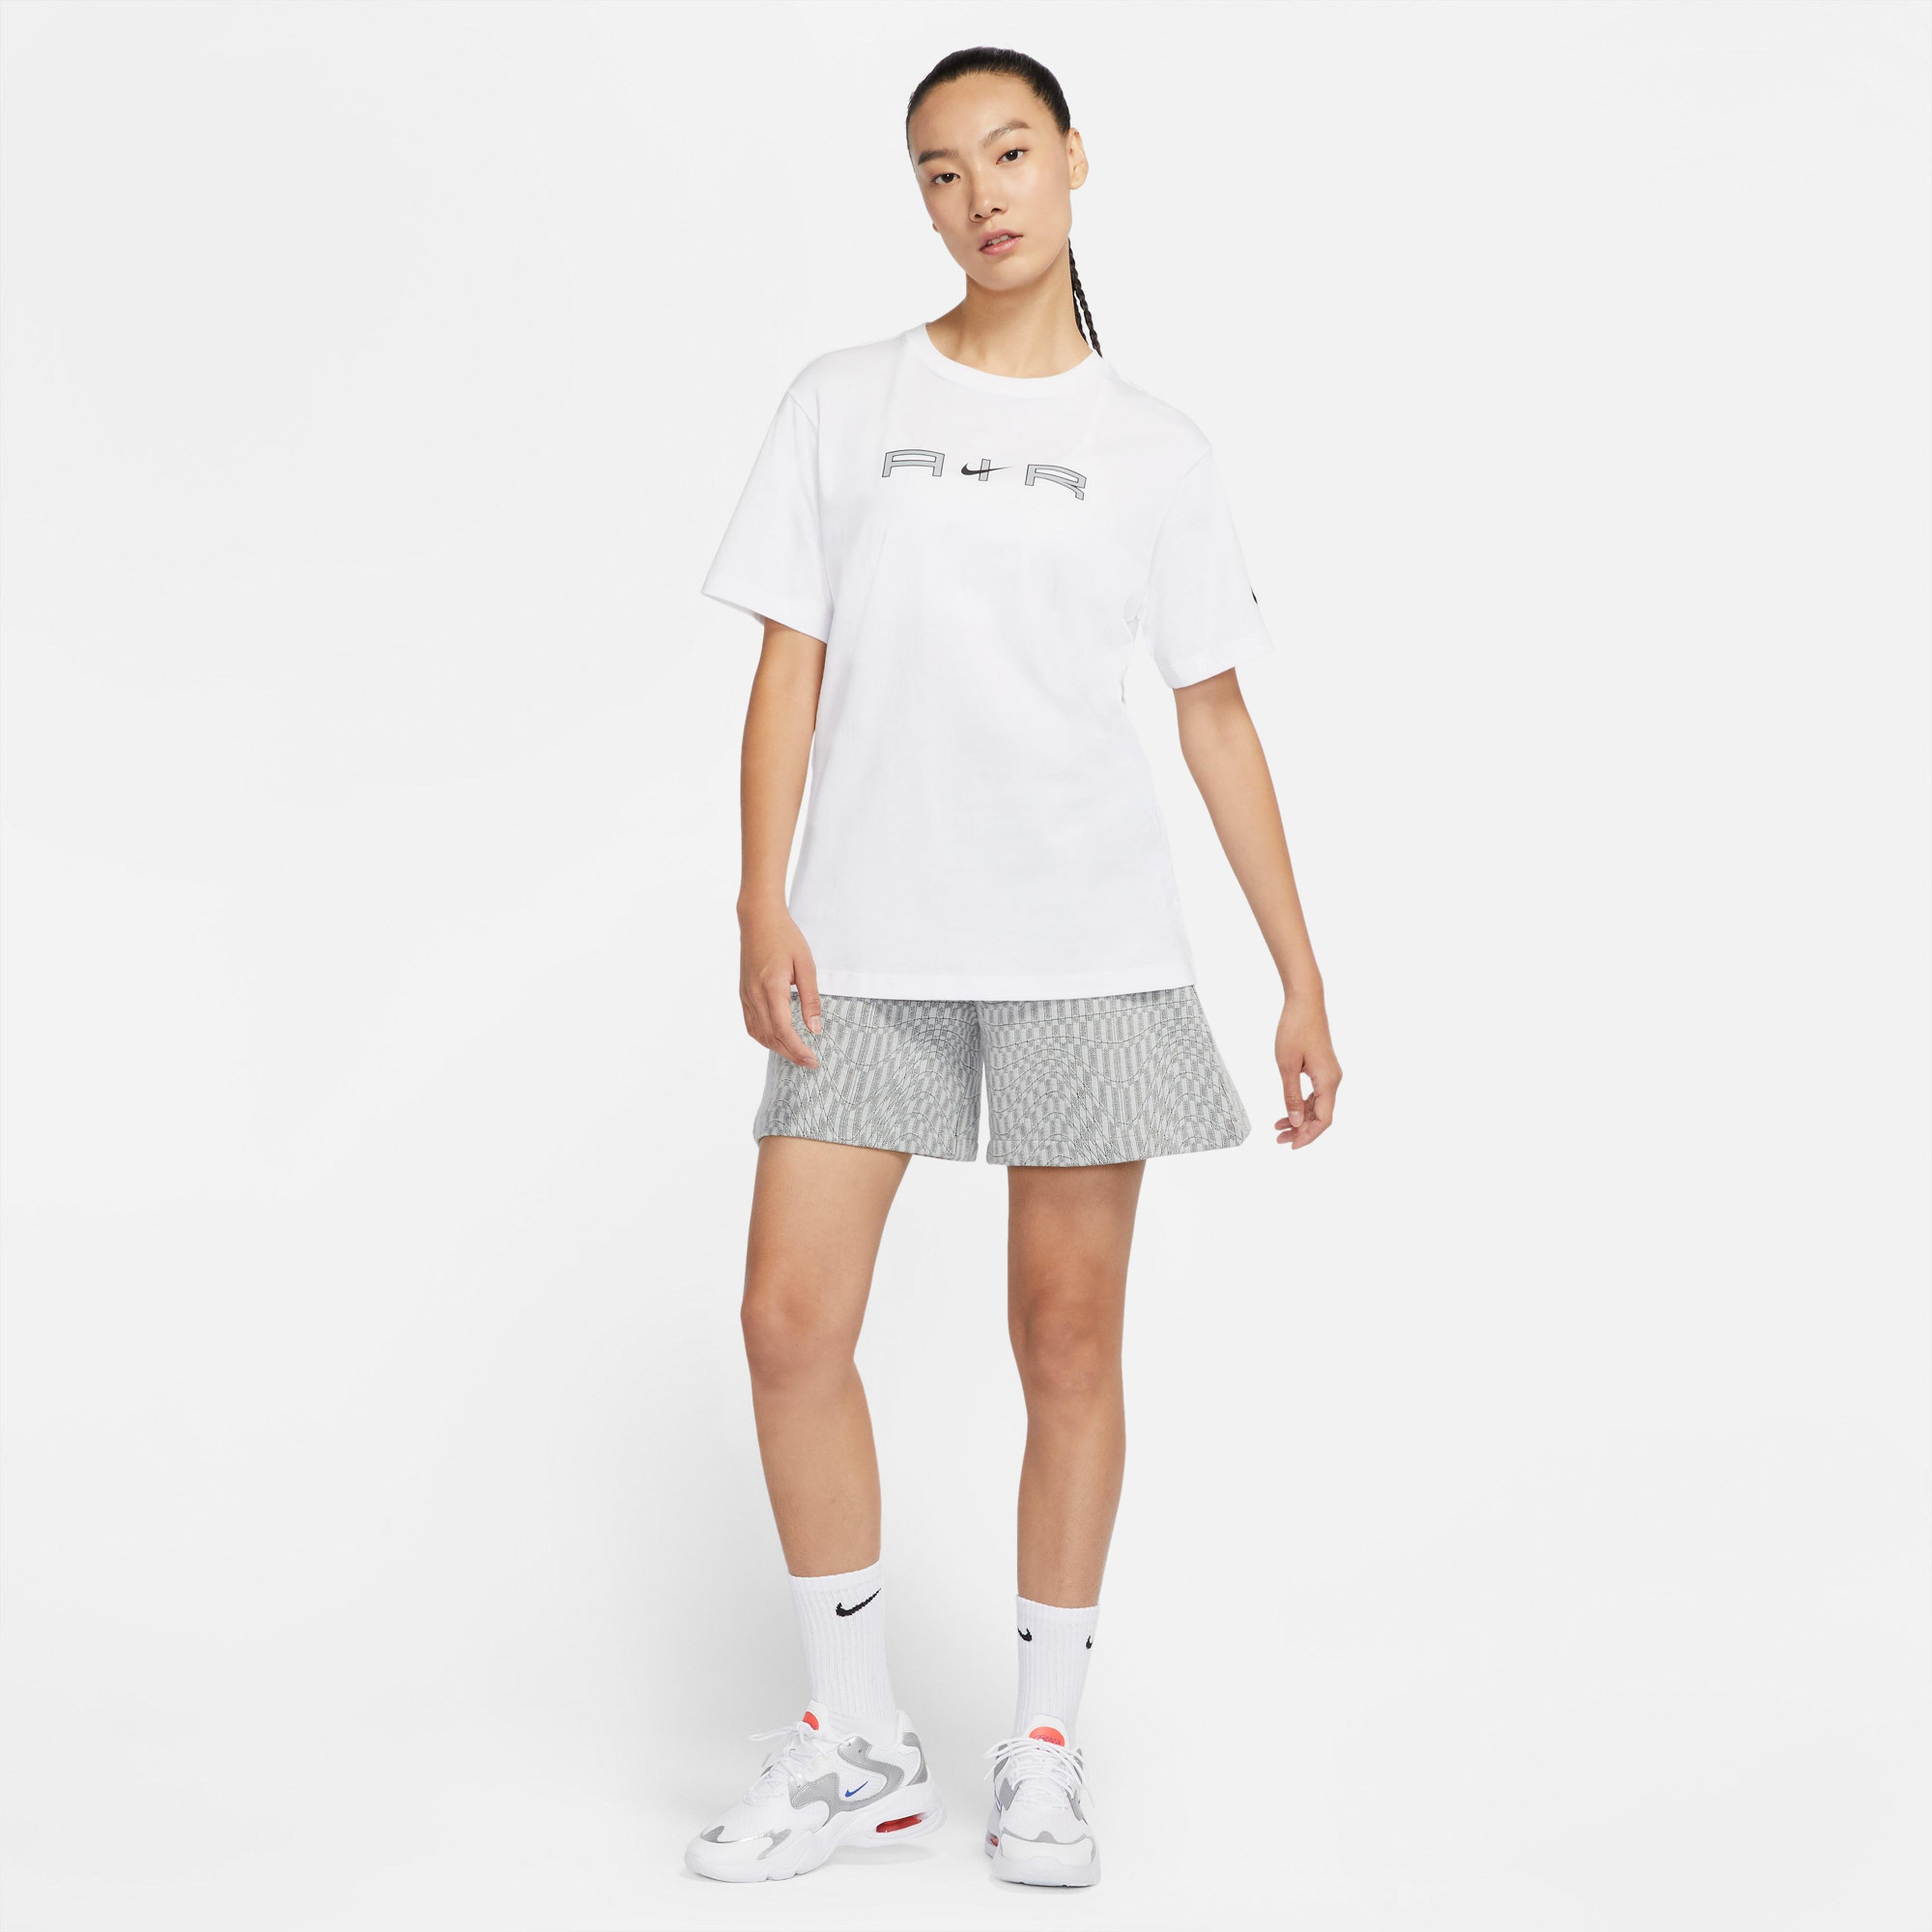 Nike Air Top Kadın Beyaz T-shirt